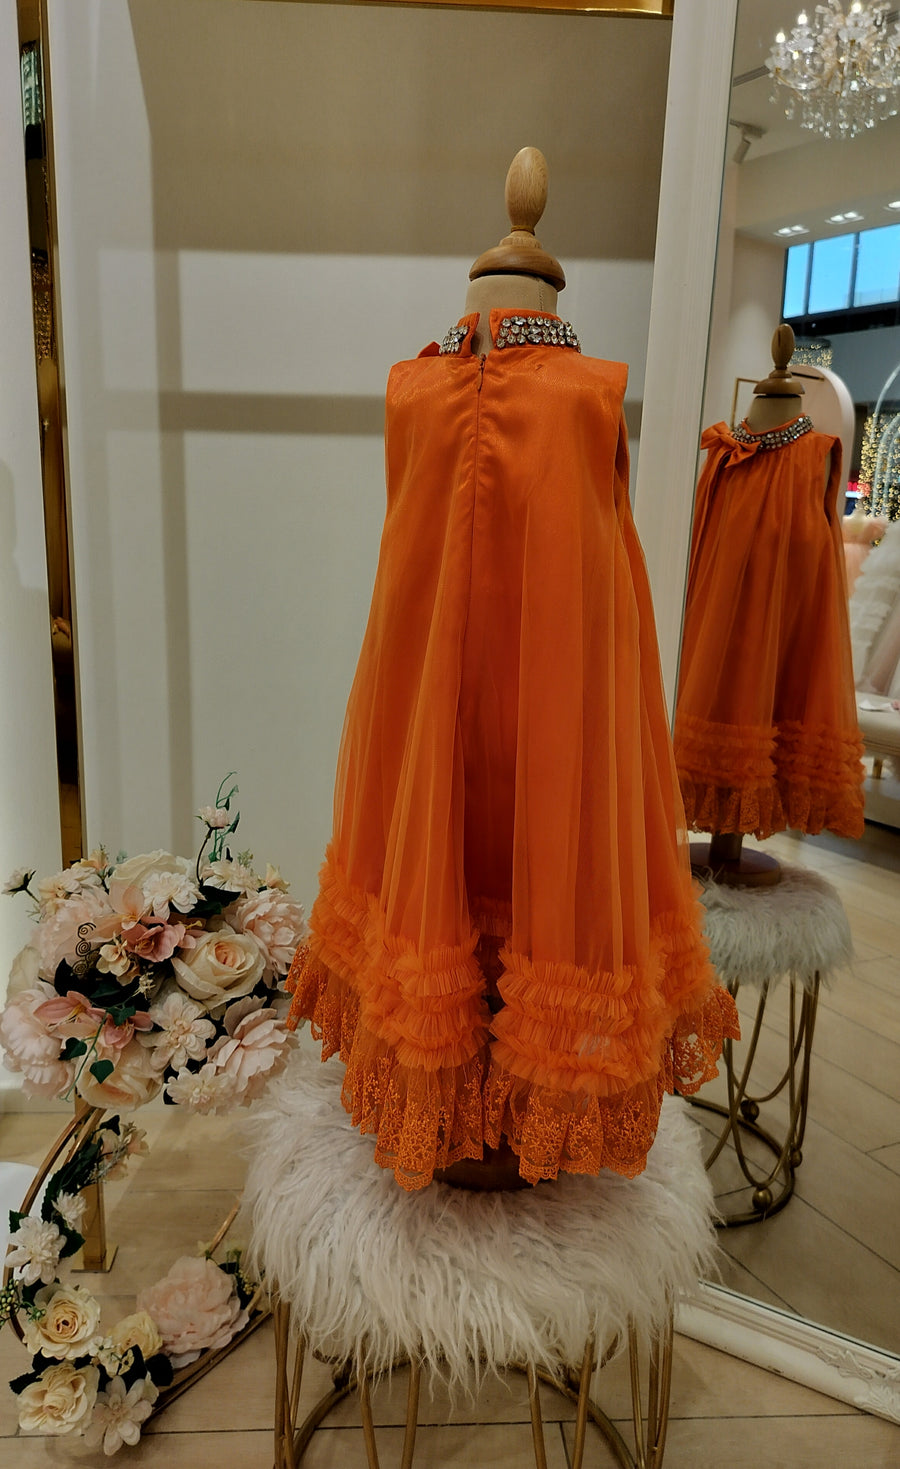 Girls occasion dress Orange 2185